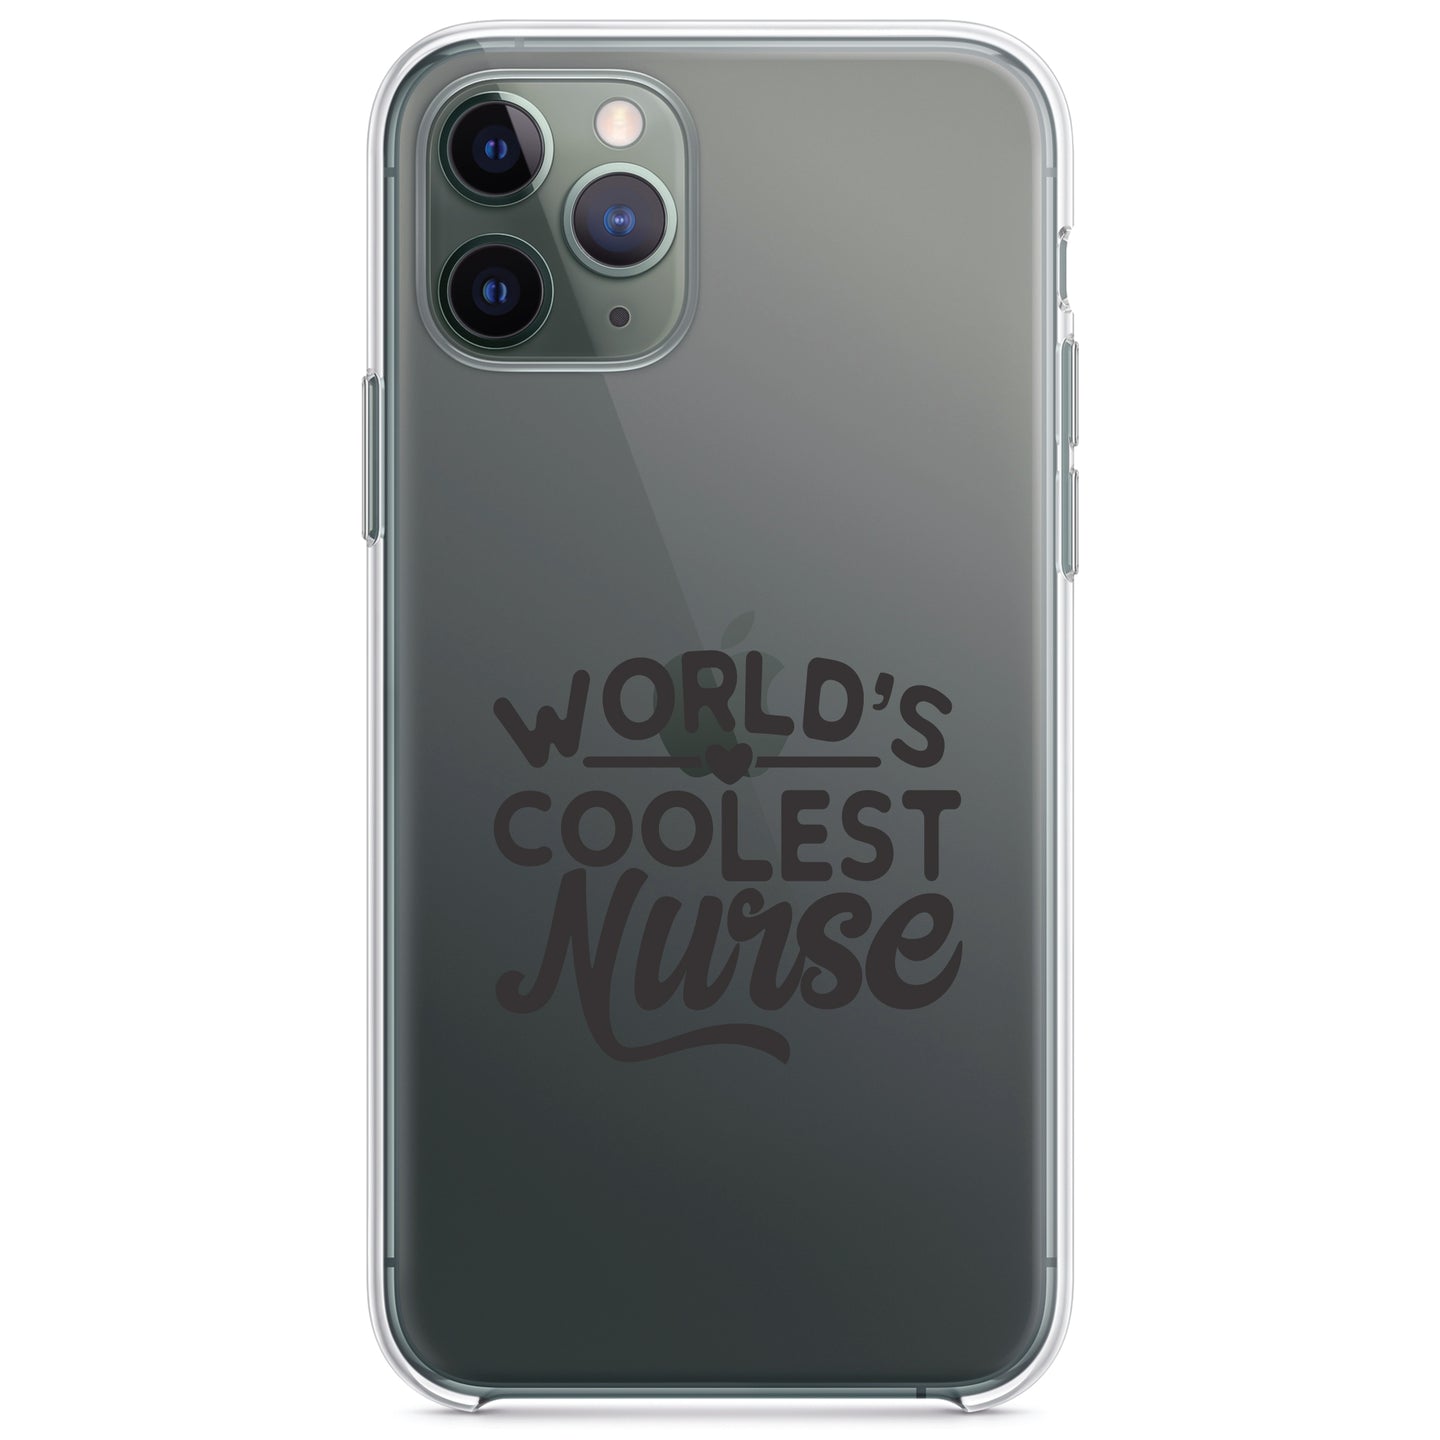 DistinctInk® Clear Shockproof Hybrid Case for Apple iPhone / Samsung Galaxy / Google Pixel - World's Coolest Nurse - Black